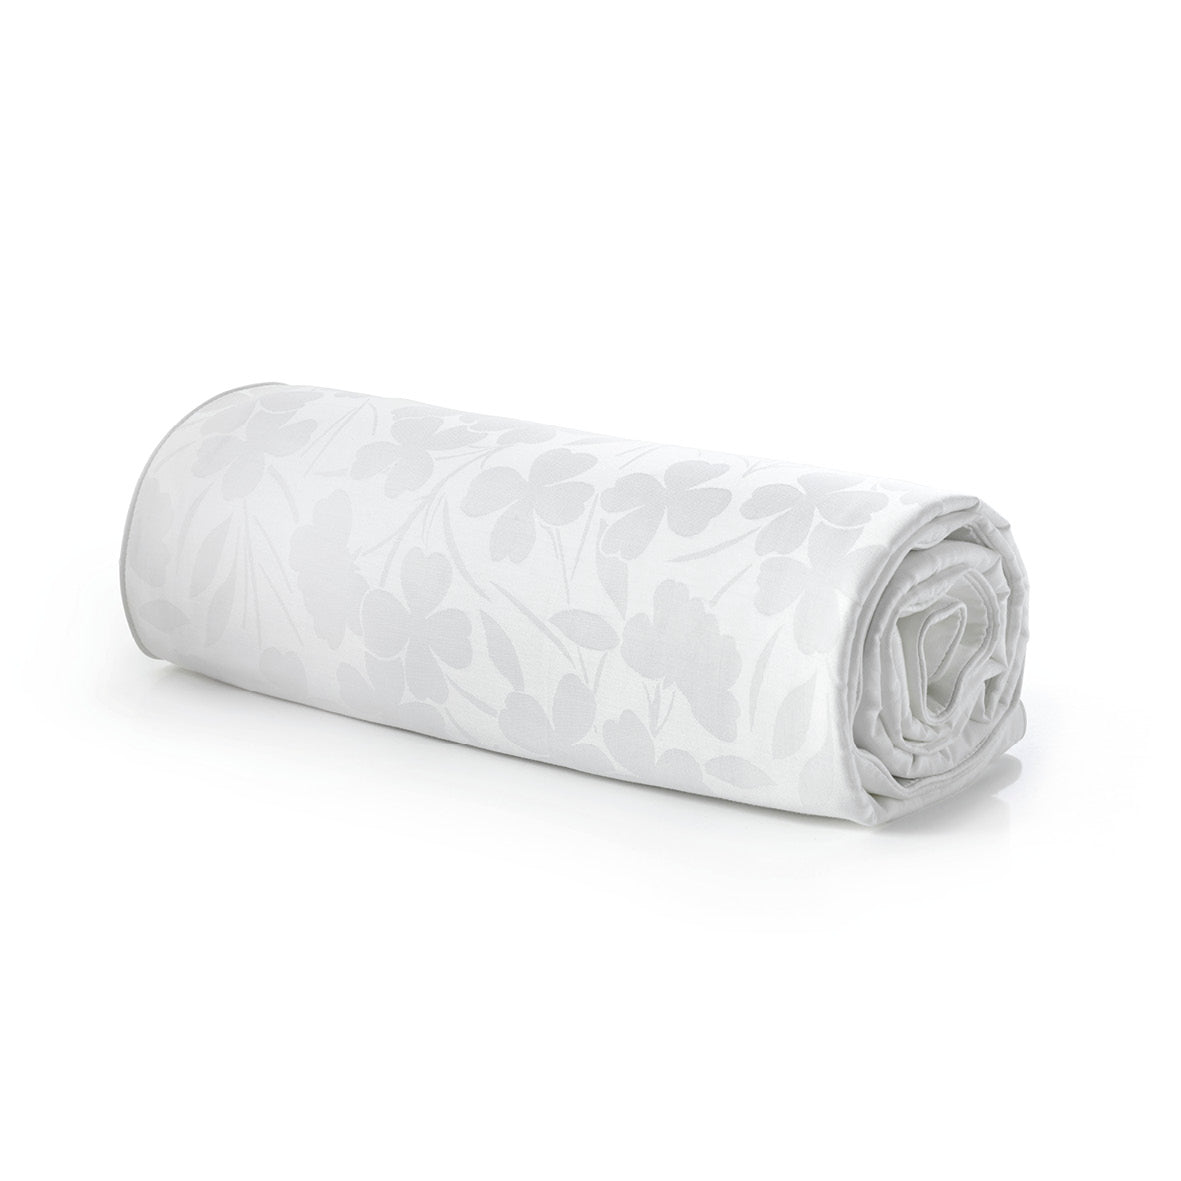 Blanket - Jacquard woven - Petites Fleurs White